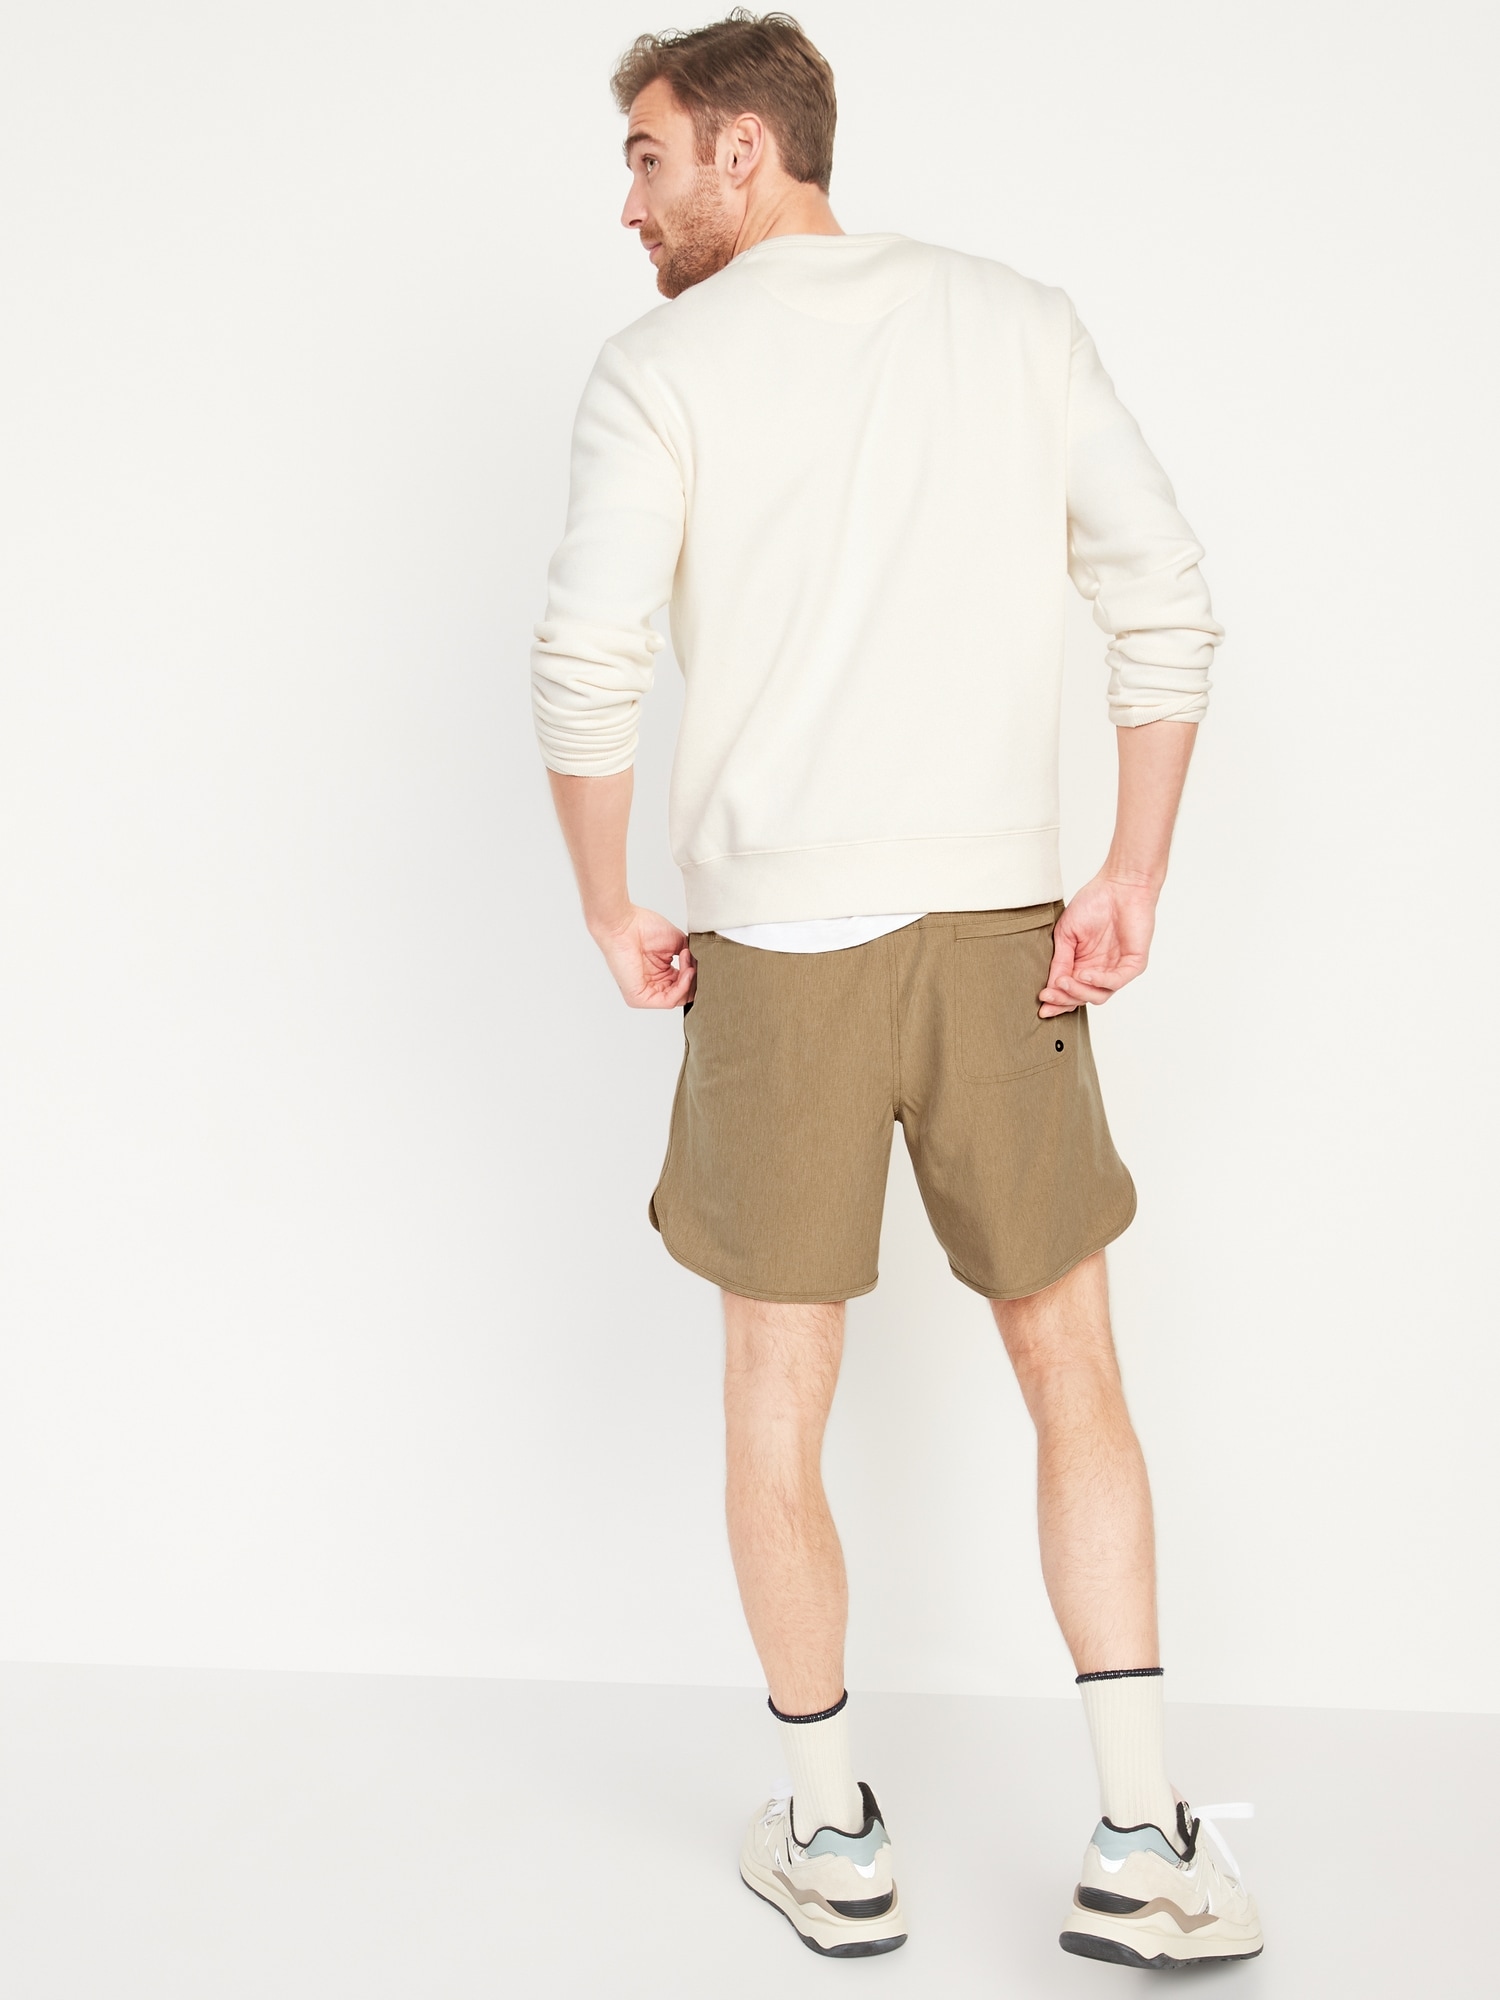 StretchTech Rec Swim-to-Street Shorts for Men -- 7-inch inseam | Old Navy